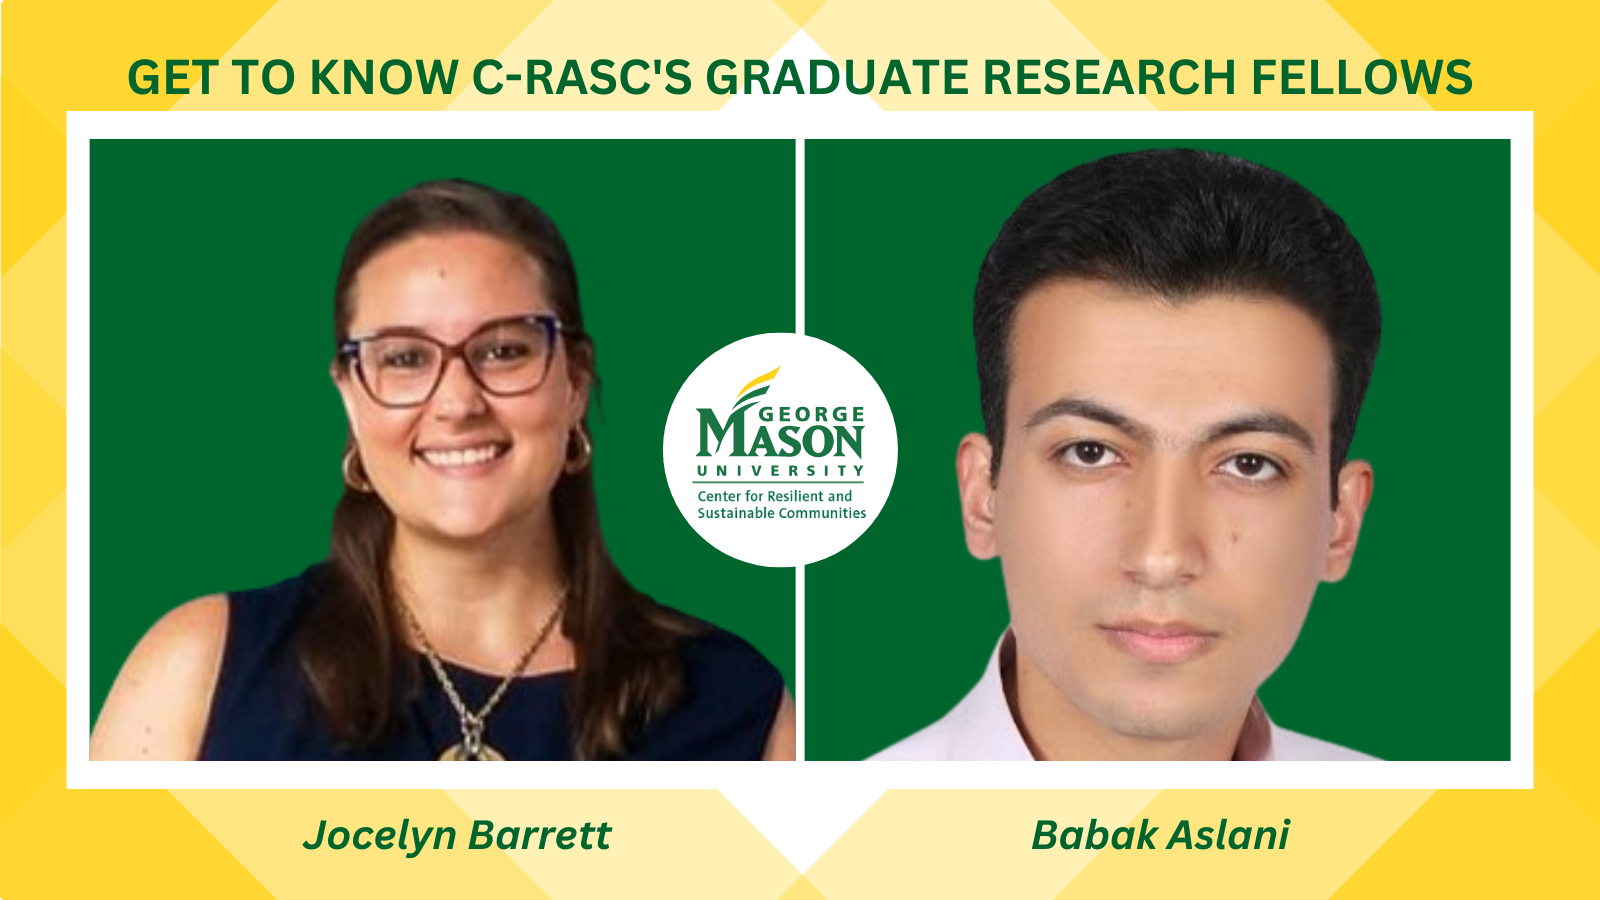 Meet C-RASC’s Graduate Research Fellows: Ms. Jocelyn Barrett & Mr. Babak Aslani